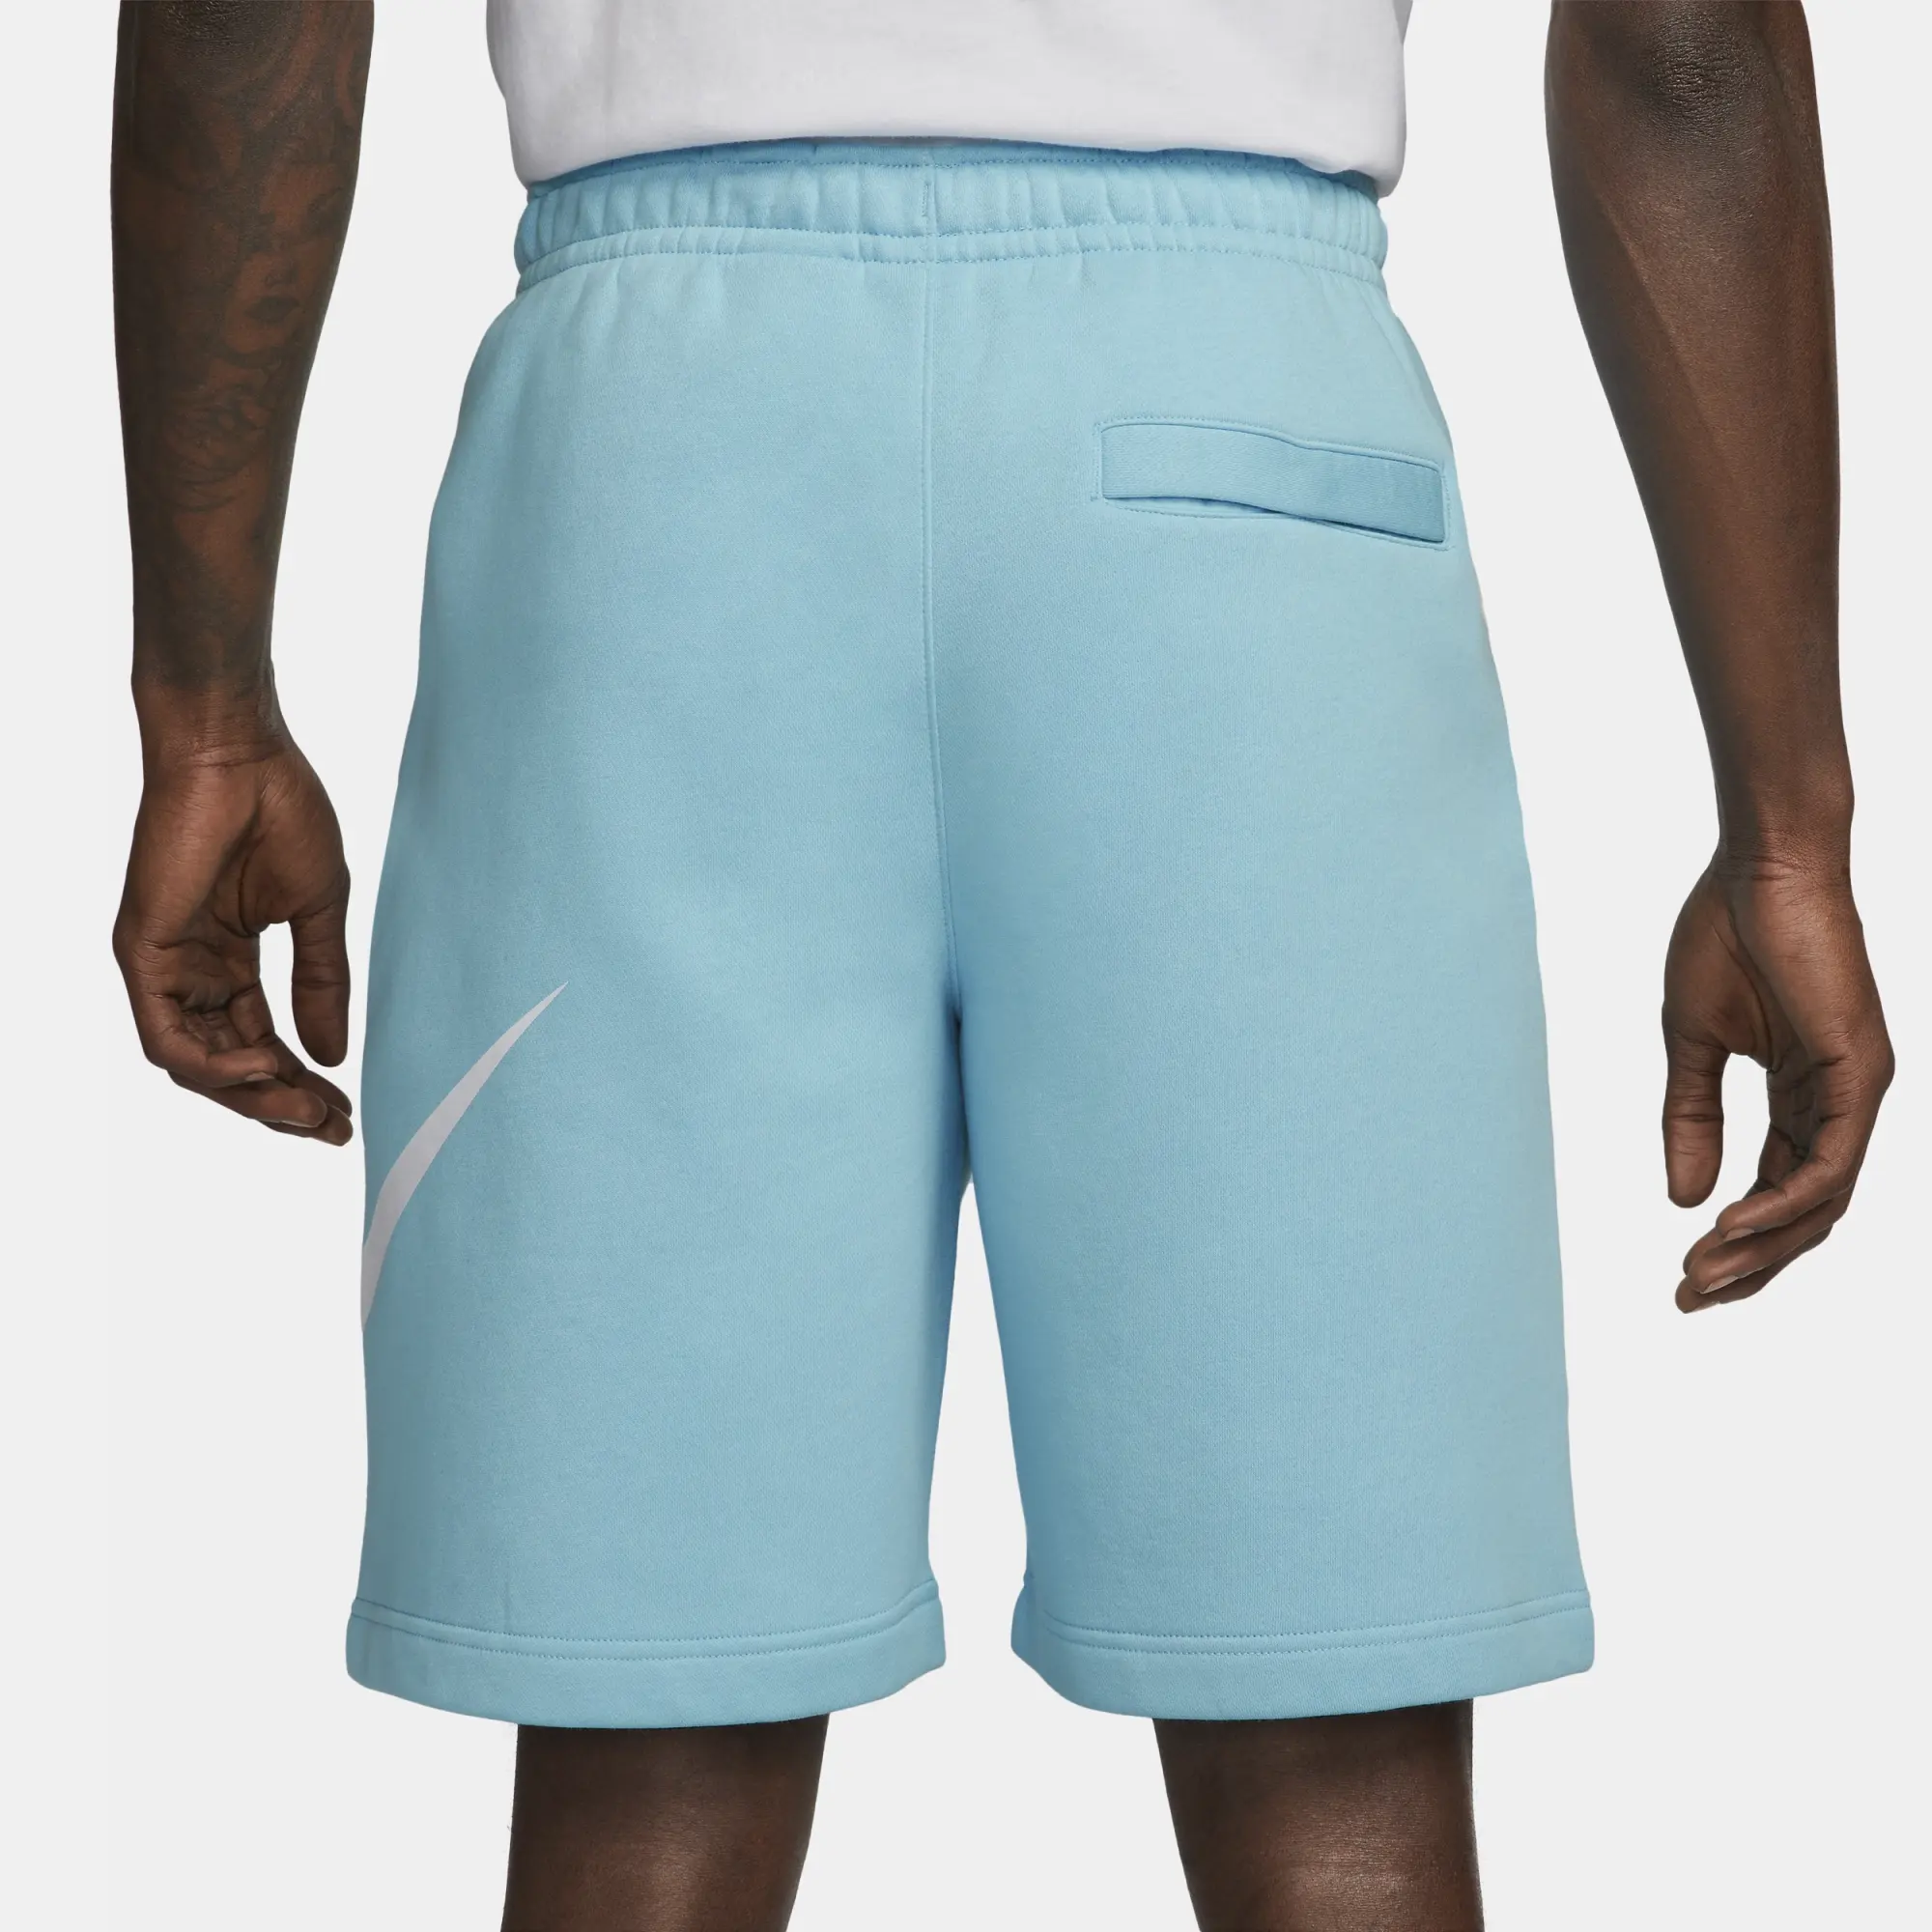 Nike Nike Plus Size NSW Club Fleece Swoosh Short, Black/White